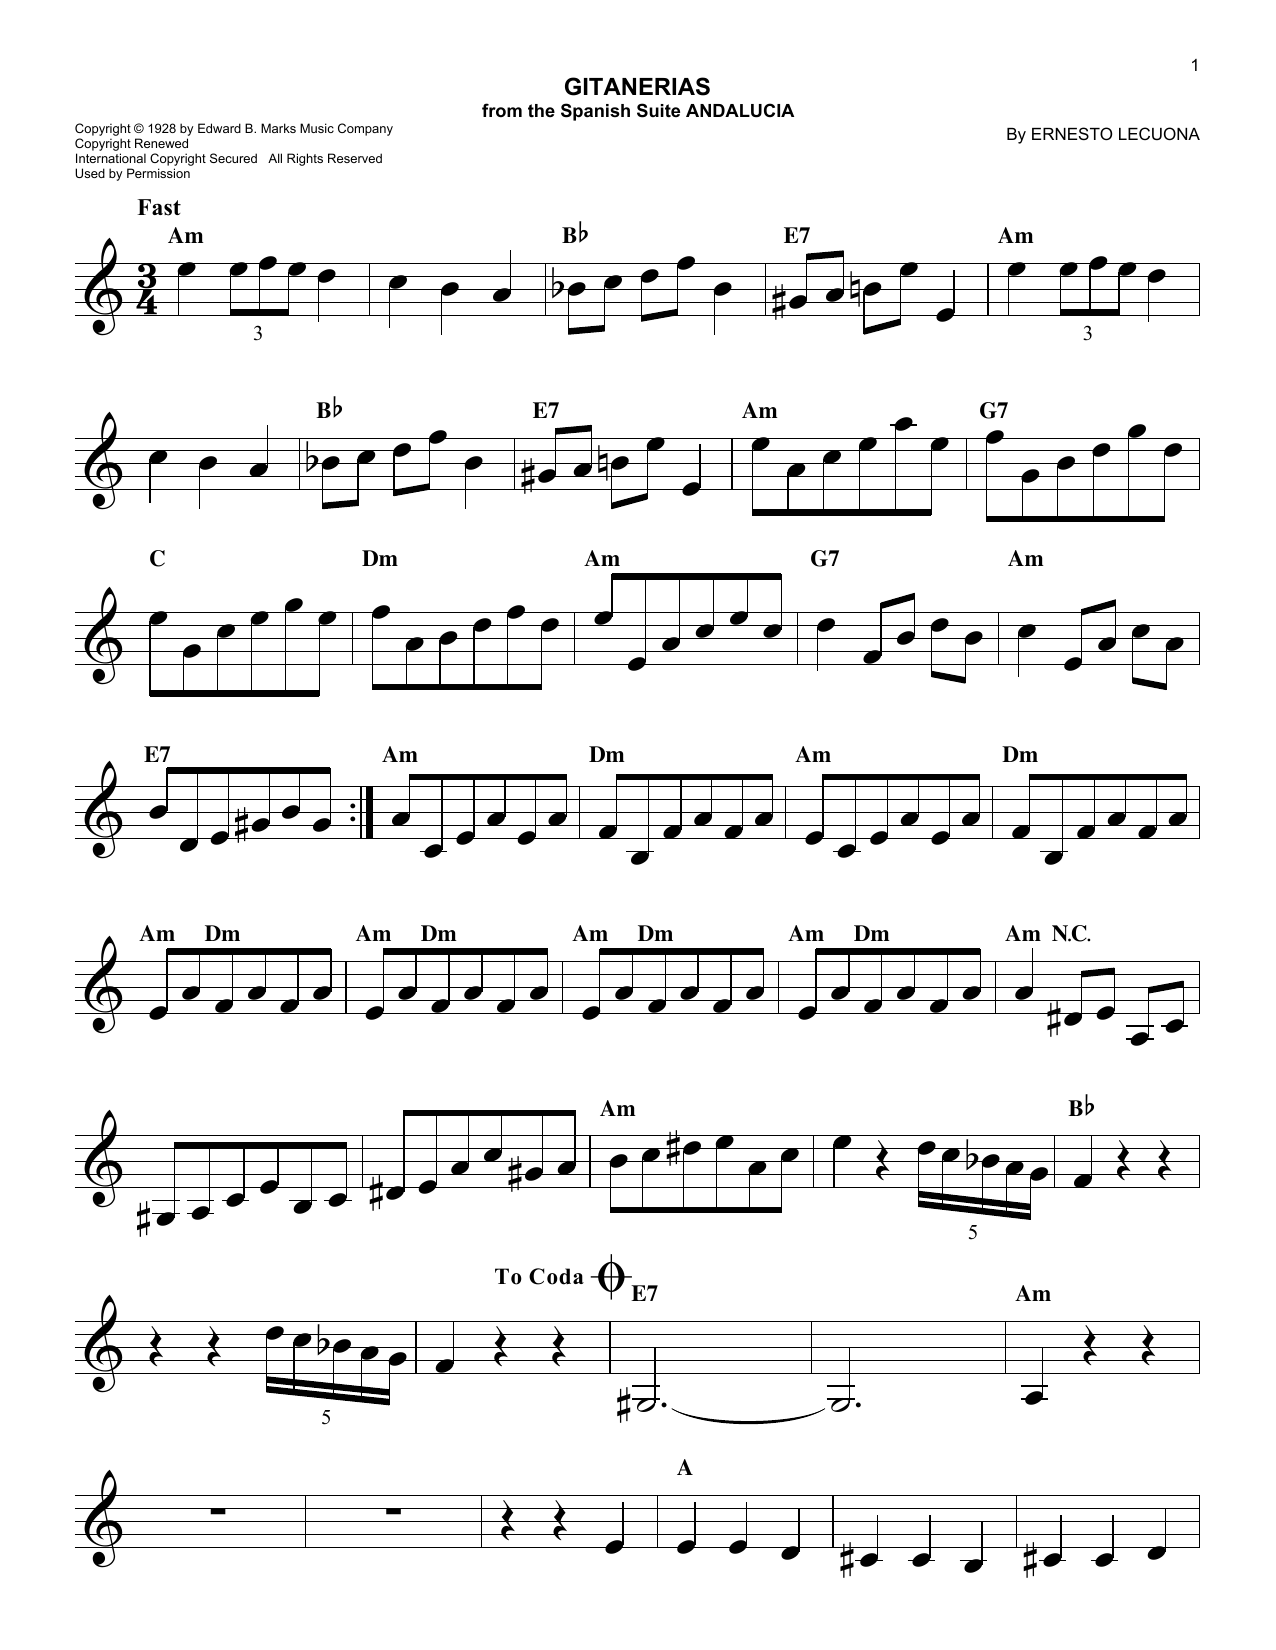 Ernesto Lecuona Gitanerias Sheet Music Notes & Chords for Real Book – Melody & Chords - Download or Print PDF